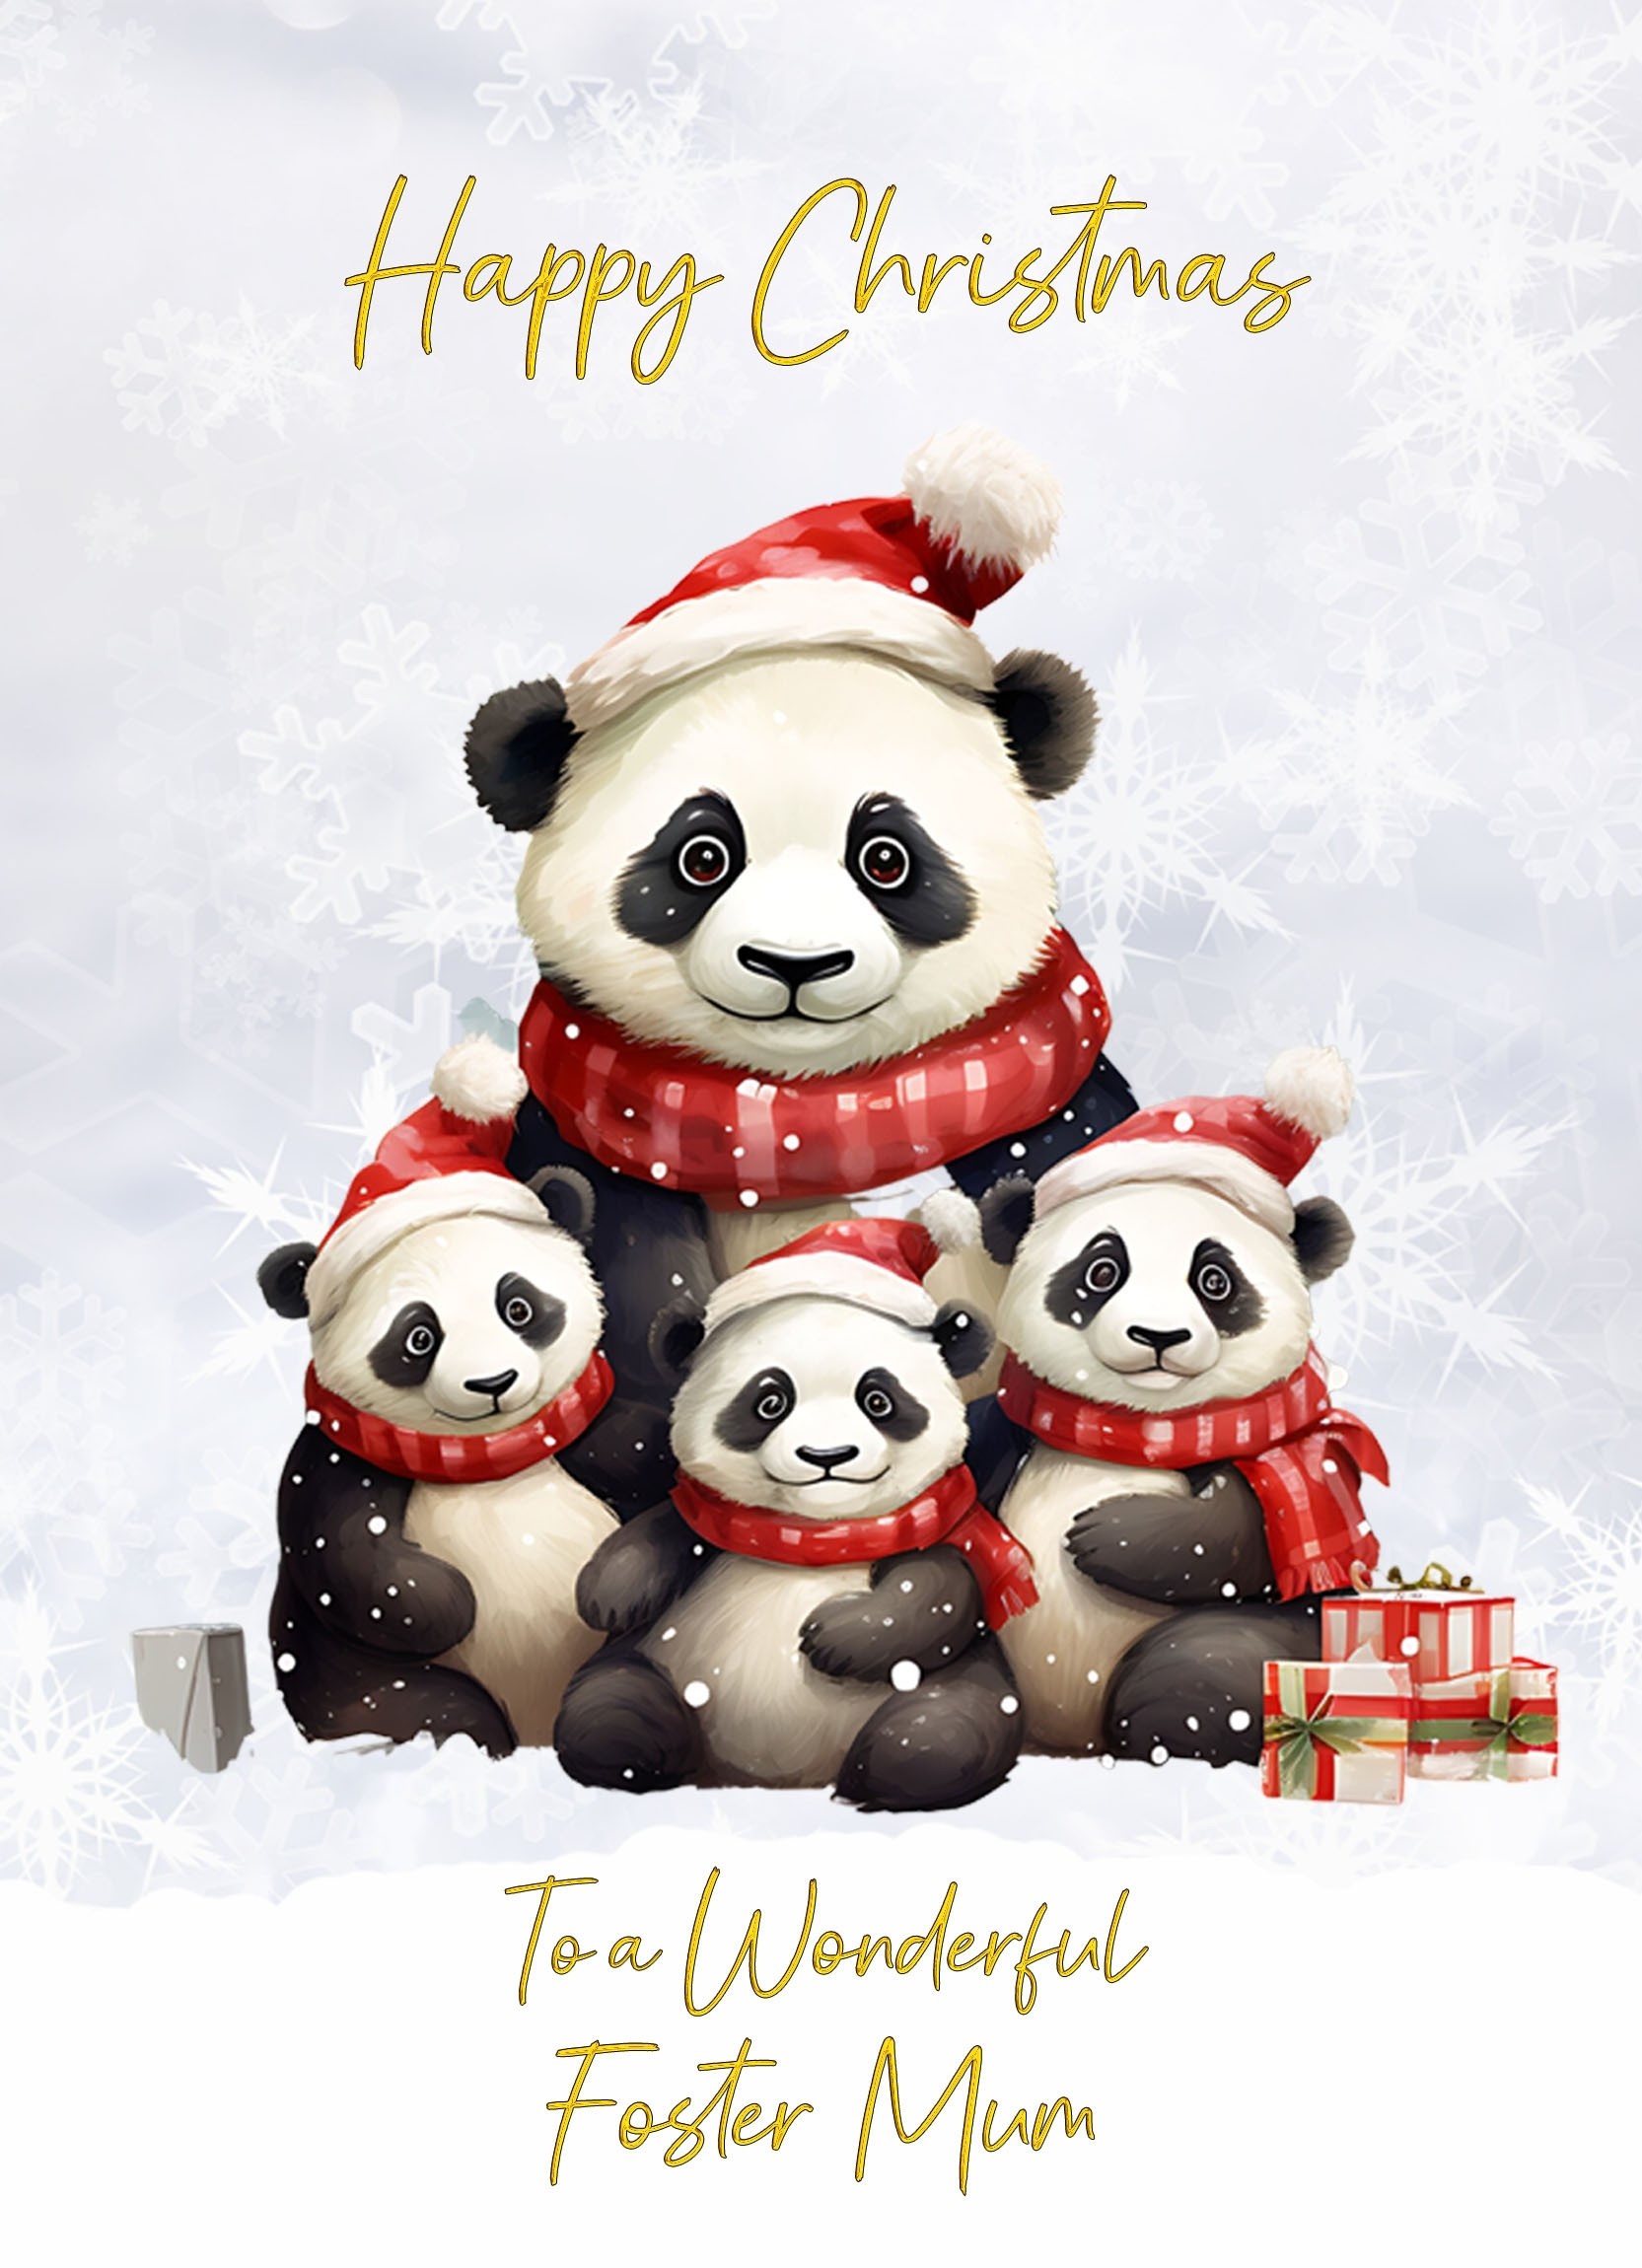 Christmas Card For Foster Mum (Panda Bear Family Art)